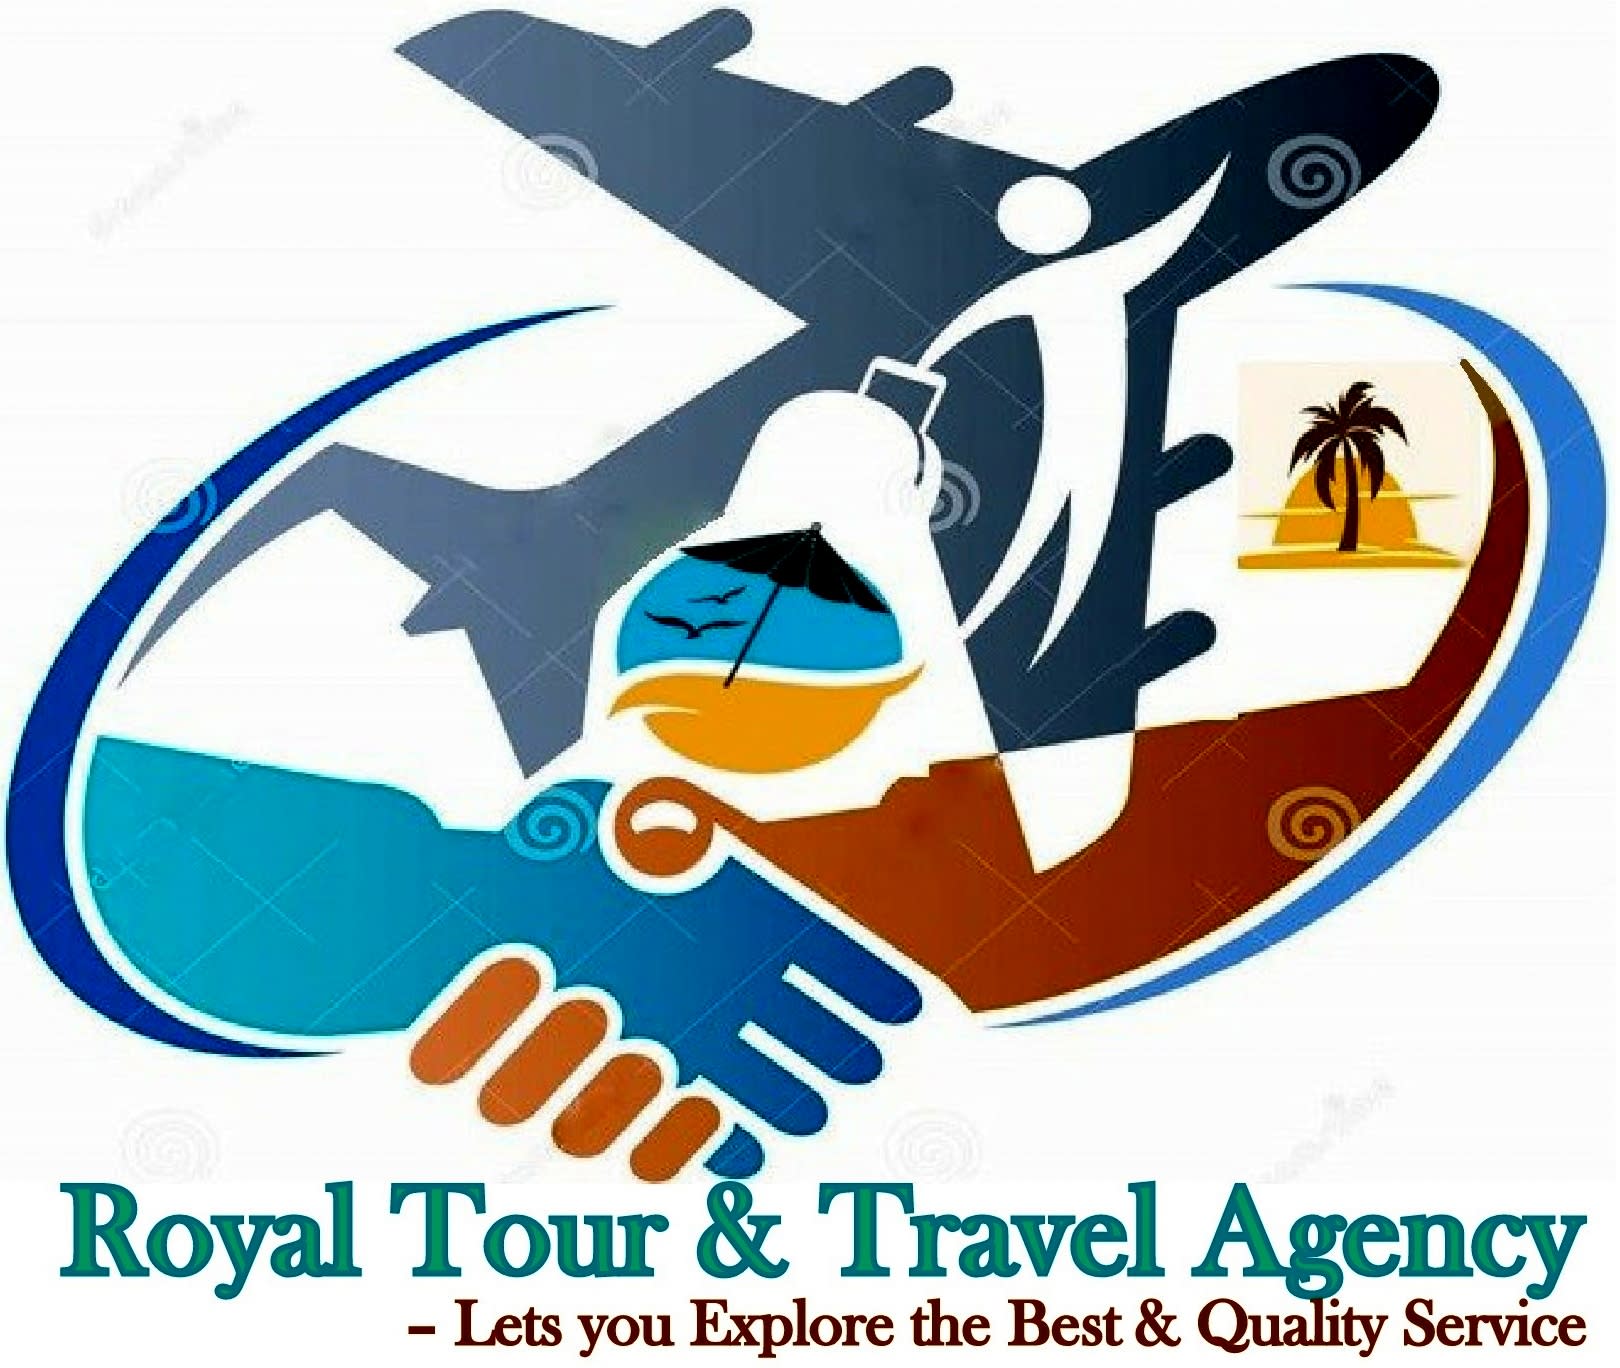 Royal Tour & Travel Agency